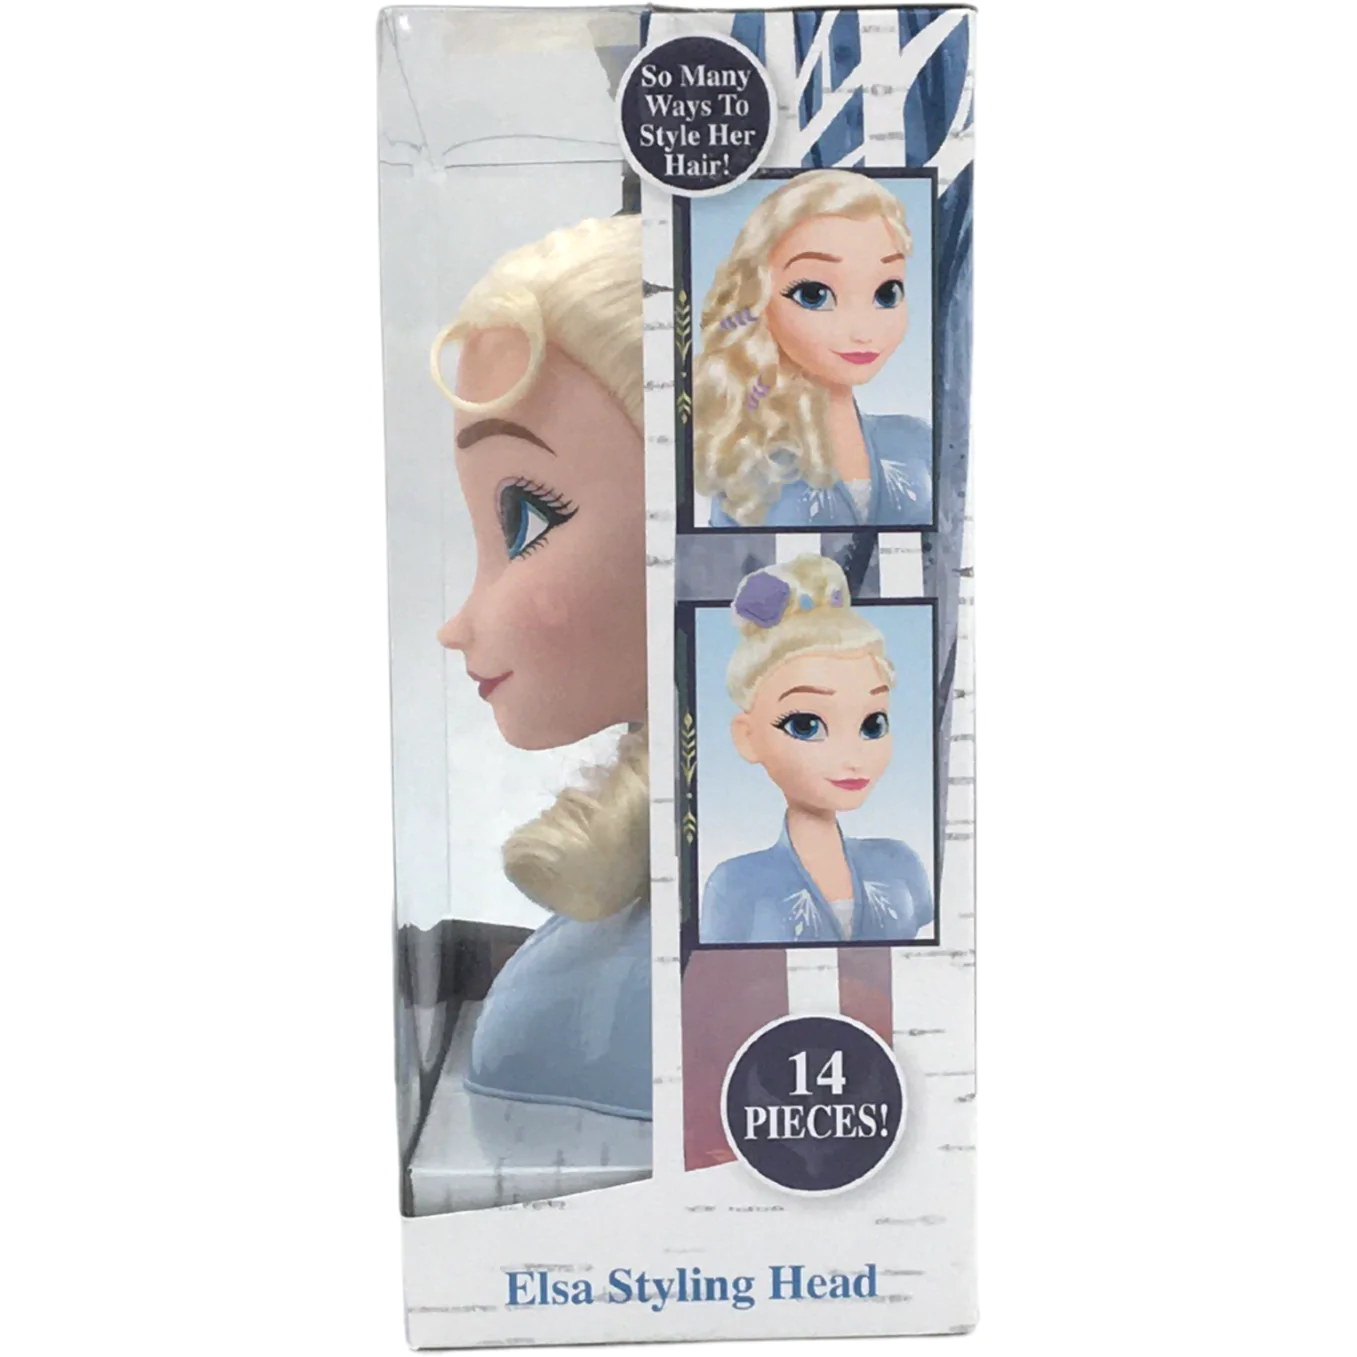 Disney Frozen Elsa Styling Head / 14 Pieces Included / Doll Head